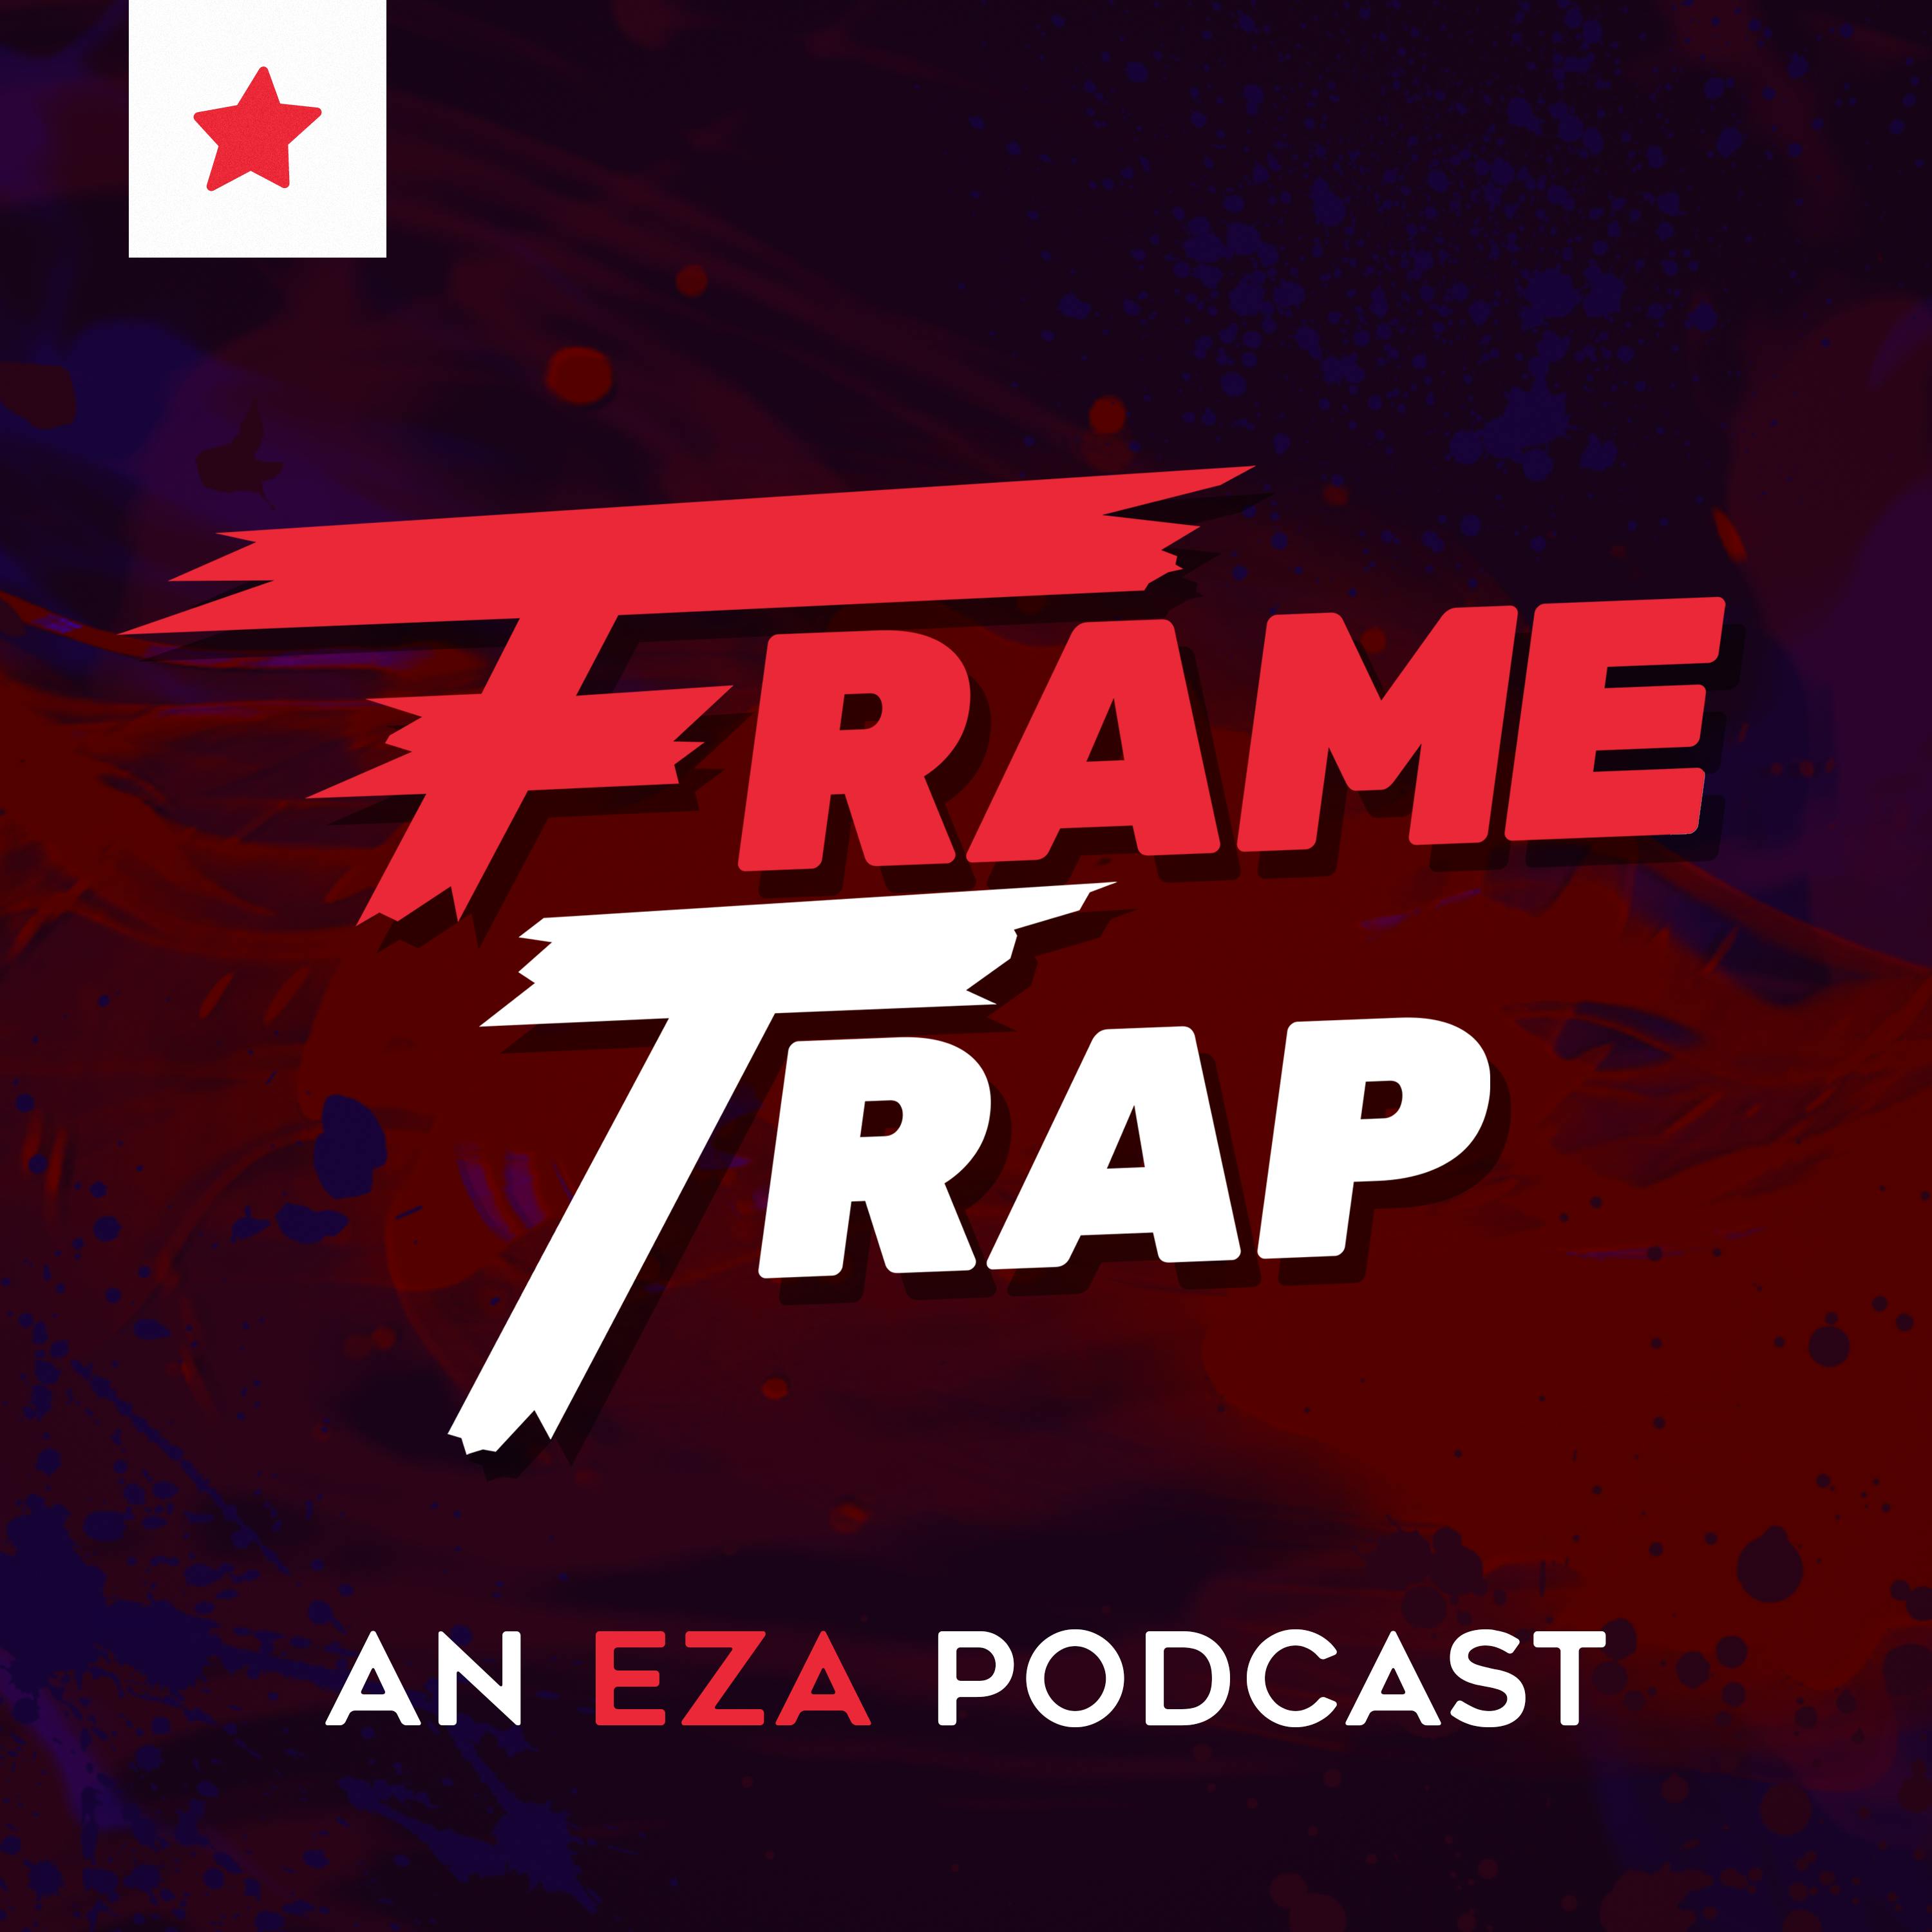 Frame Trap - Episode 181 "Return of the Kings"